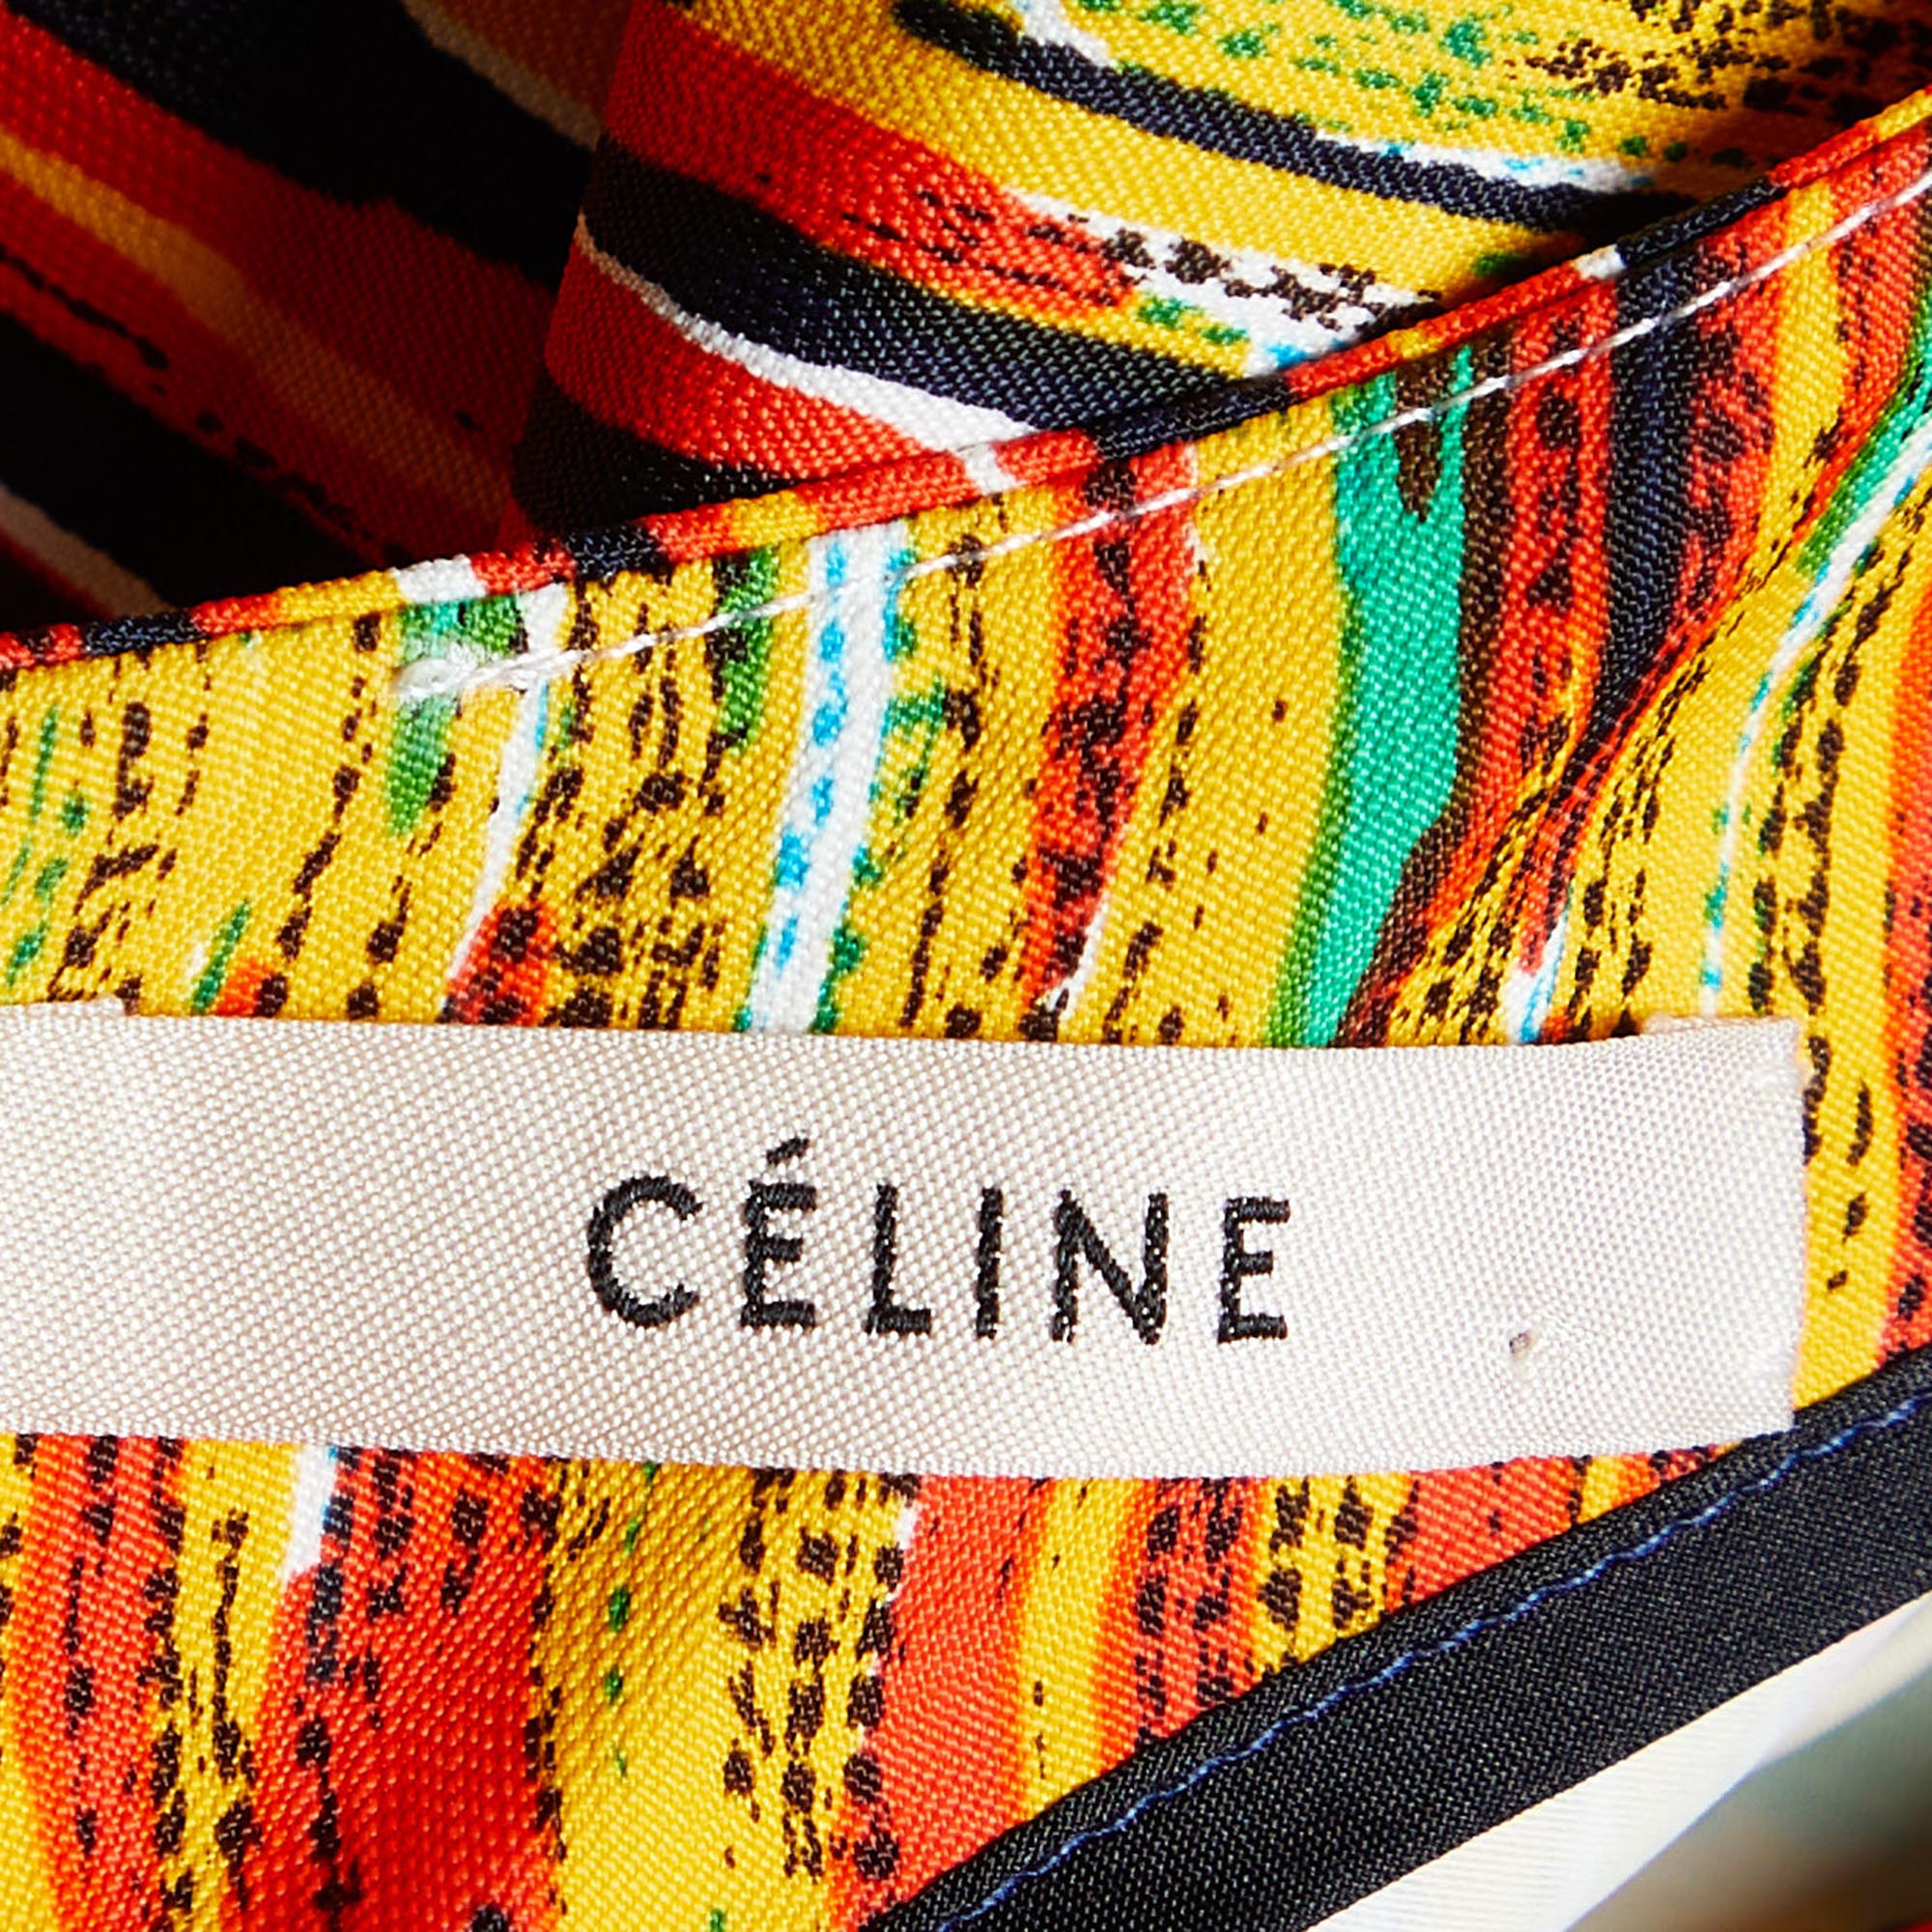 Celine Multicolor Printed Crepe Top M